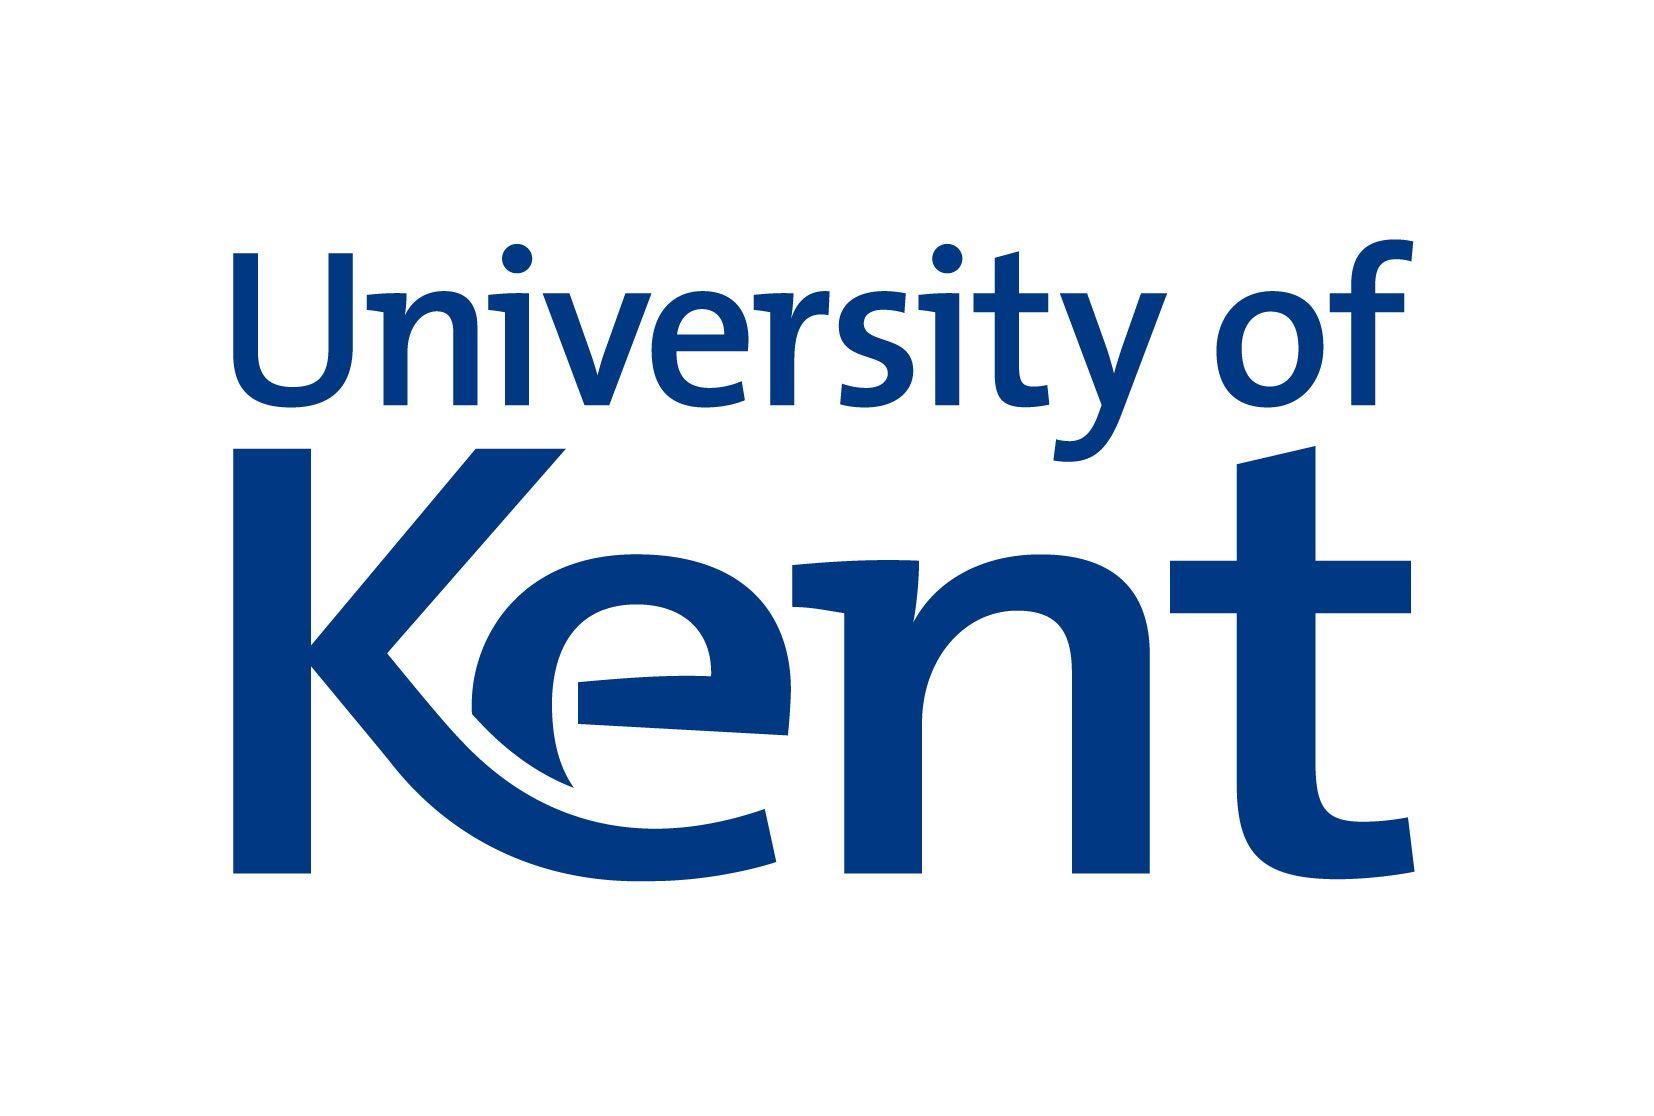 Universty Logo - Using the logo of Kent